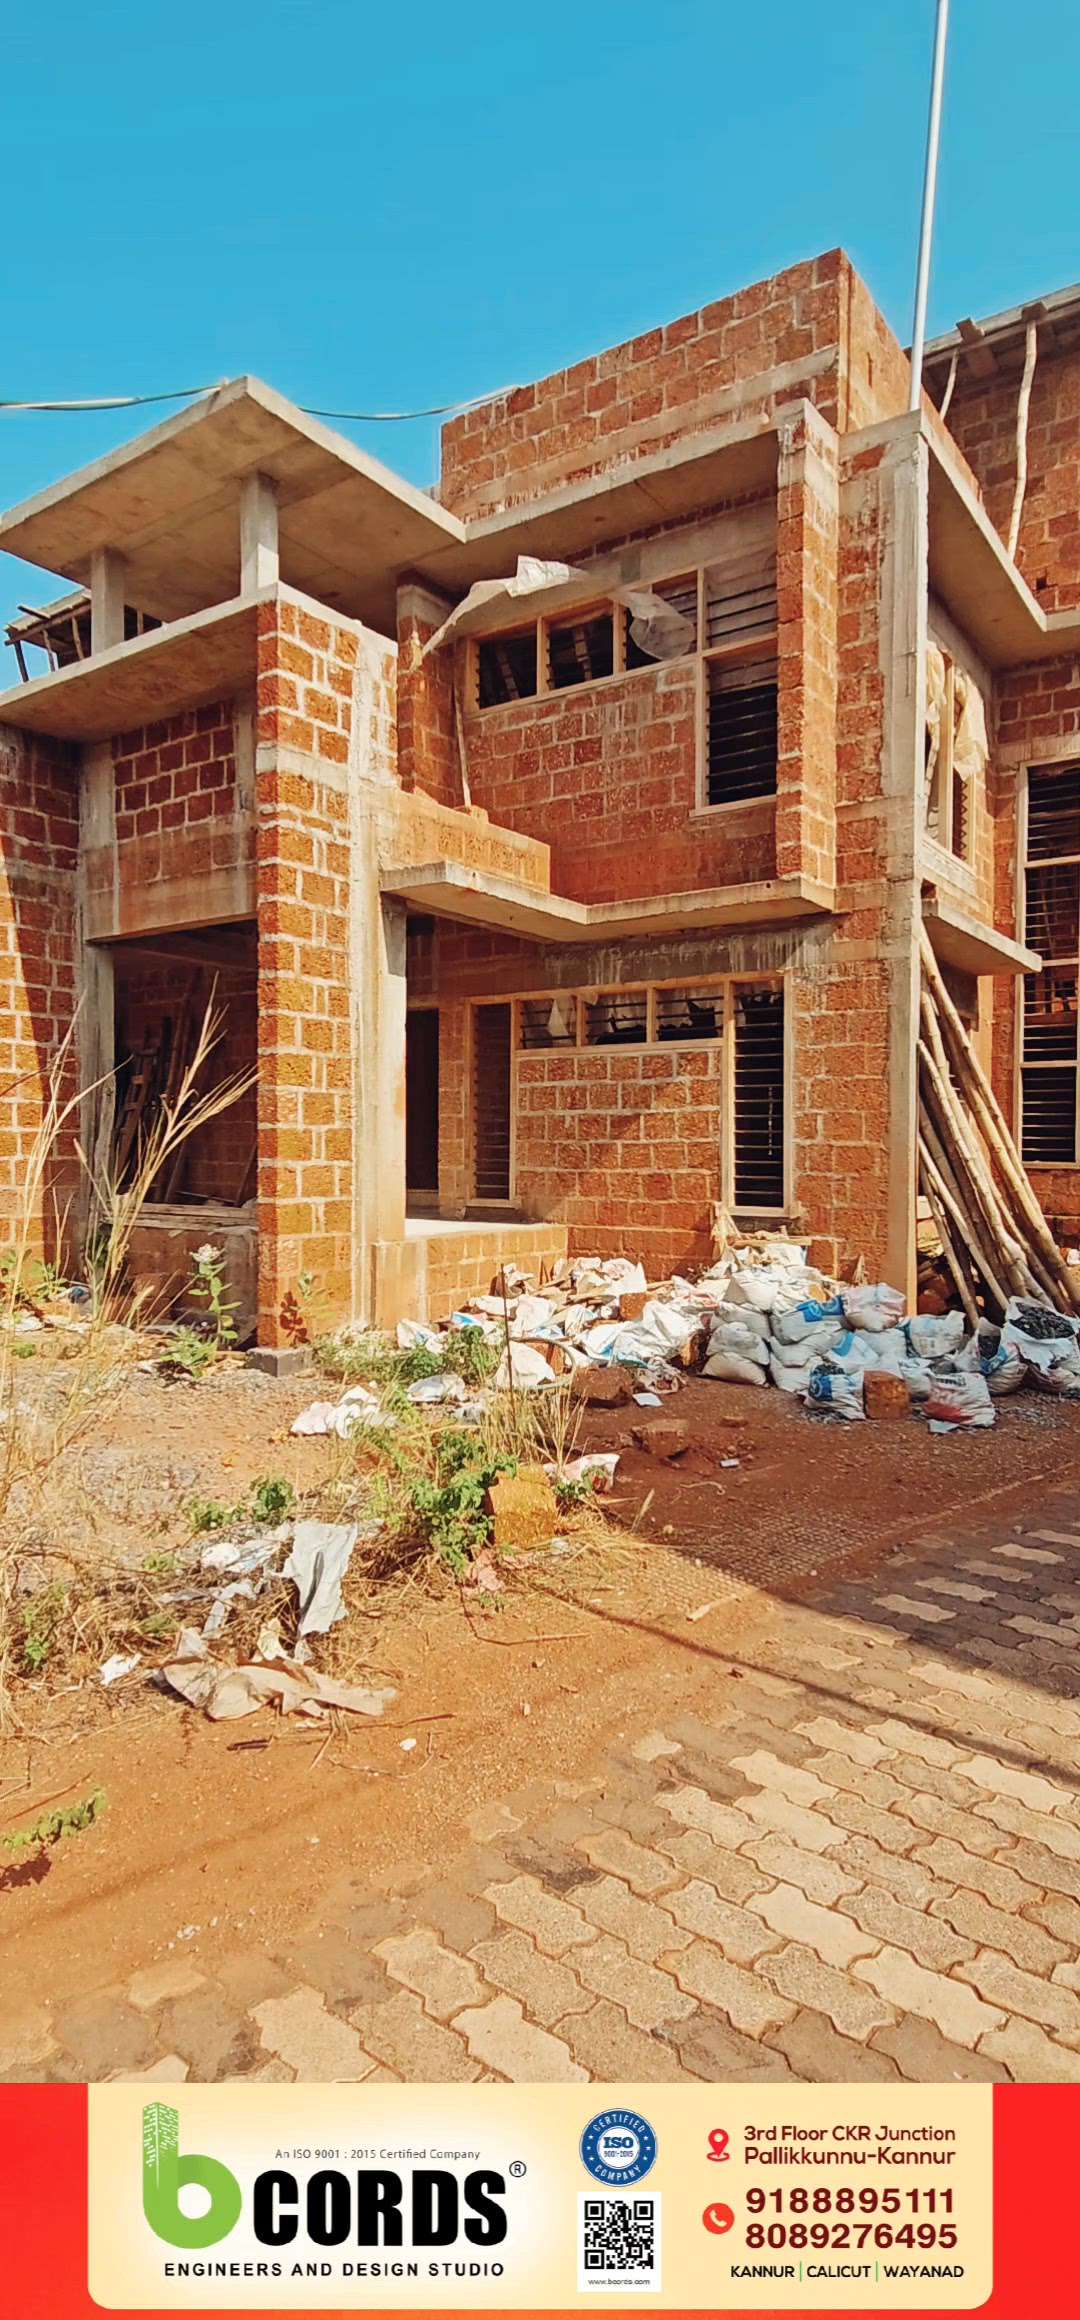 #ContemporaryHouse #HouseConstruction #goodconstruction #constructionsite